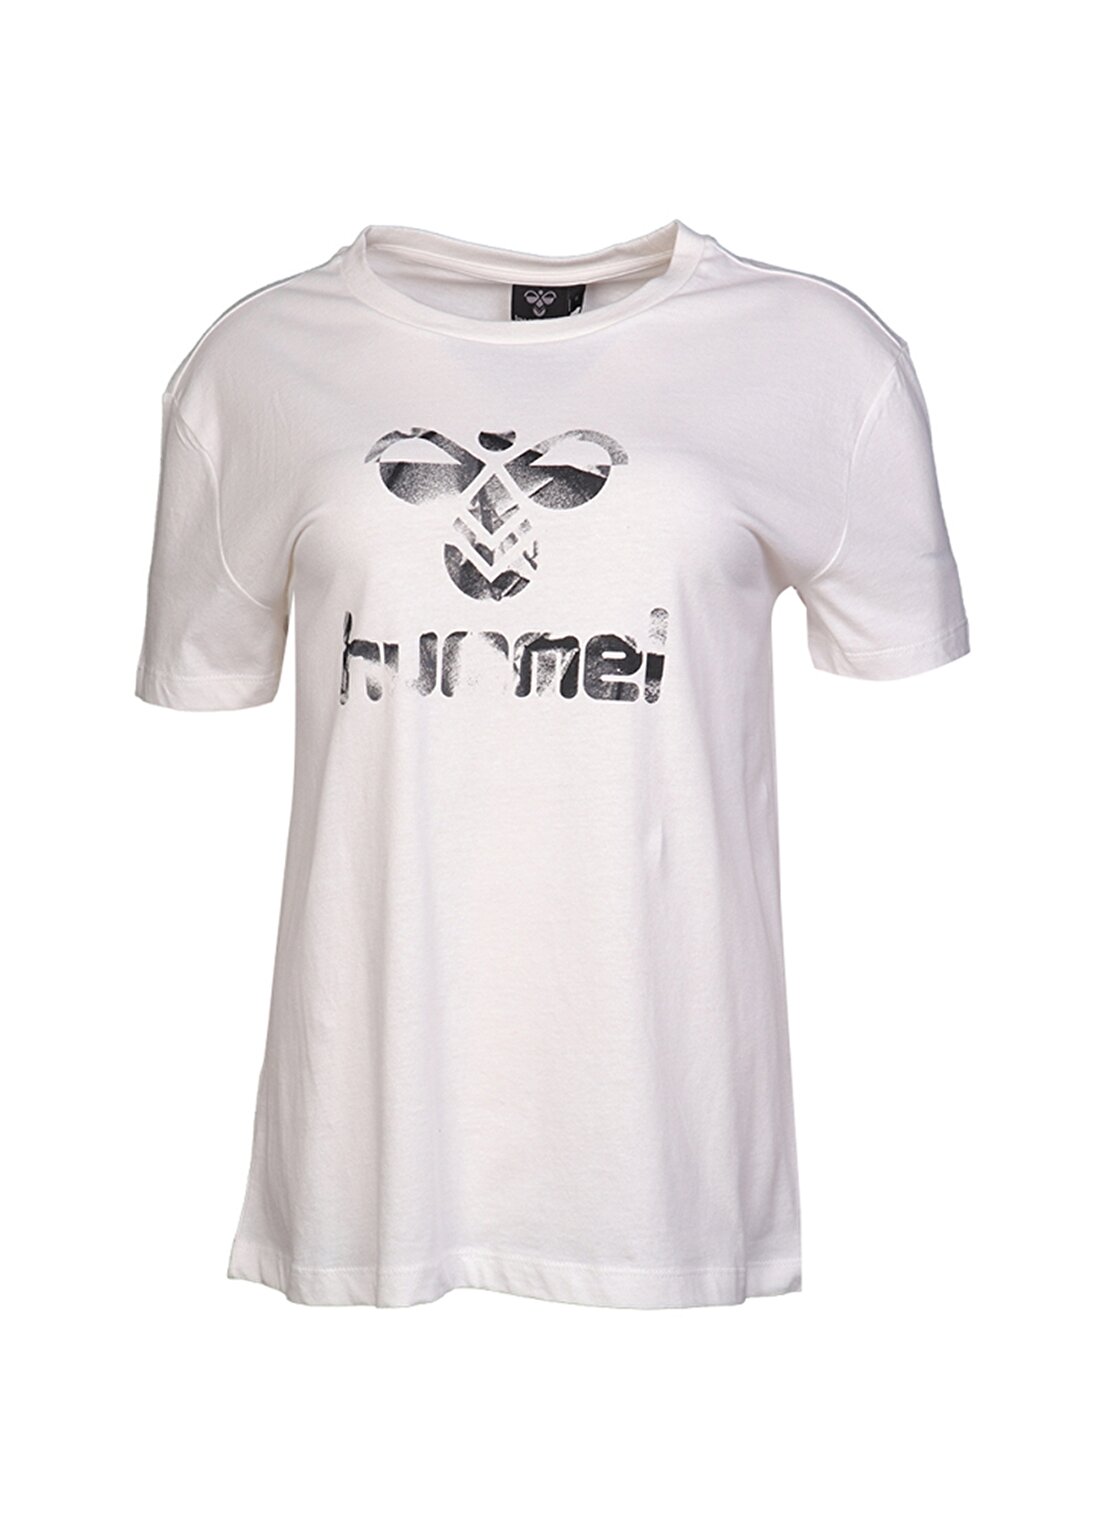 Hummel SOFIA T-SHIRT S/S TEE Beyaz Kadın T-Shirt 911033-9003